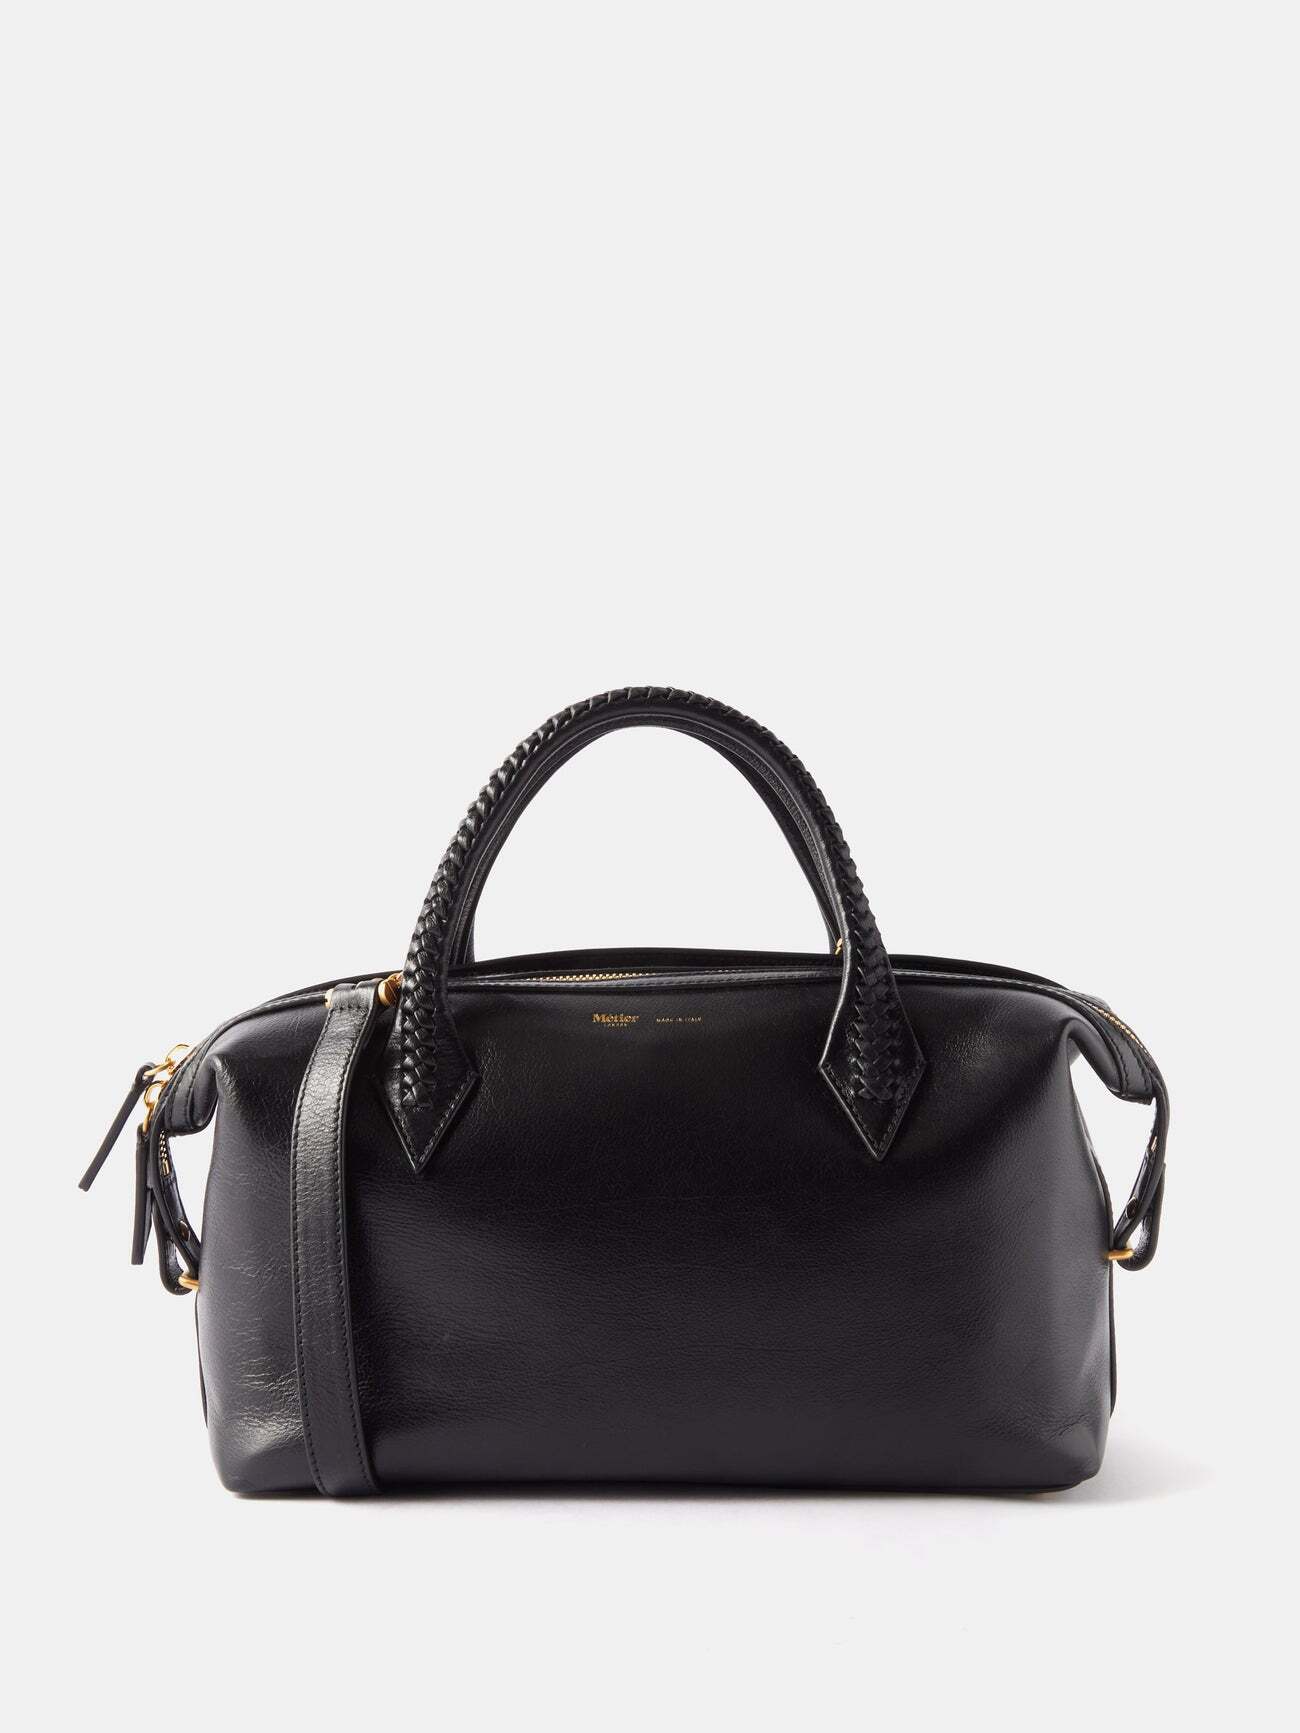 Métier - Perriand City Small Leather Handbag - Womens - Black